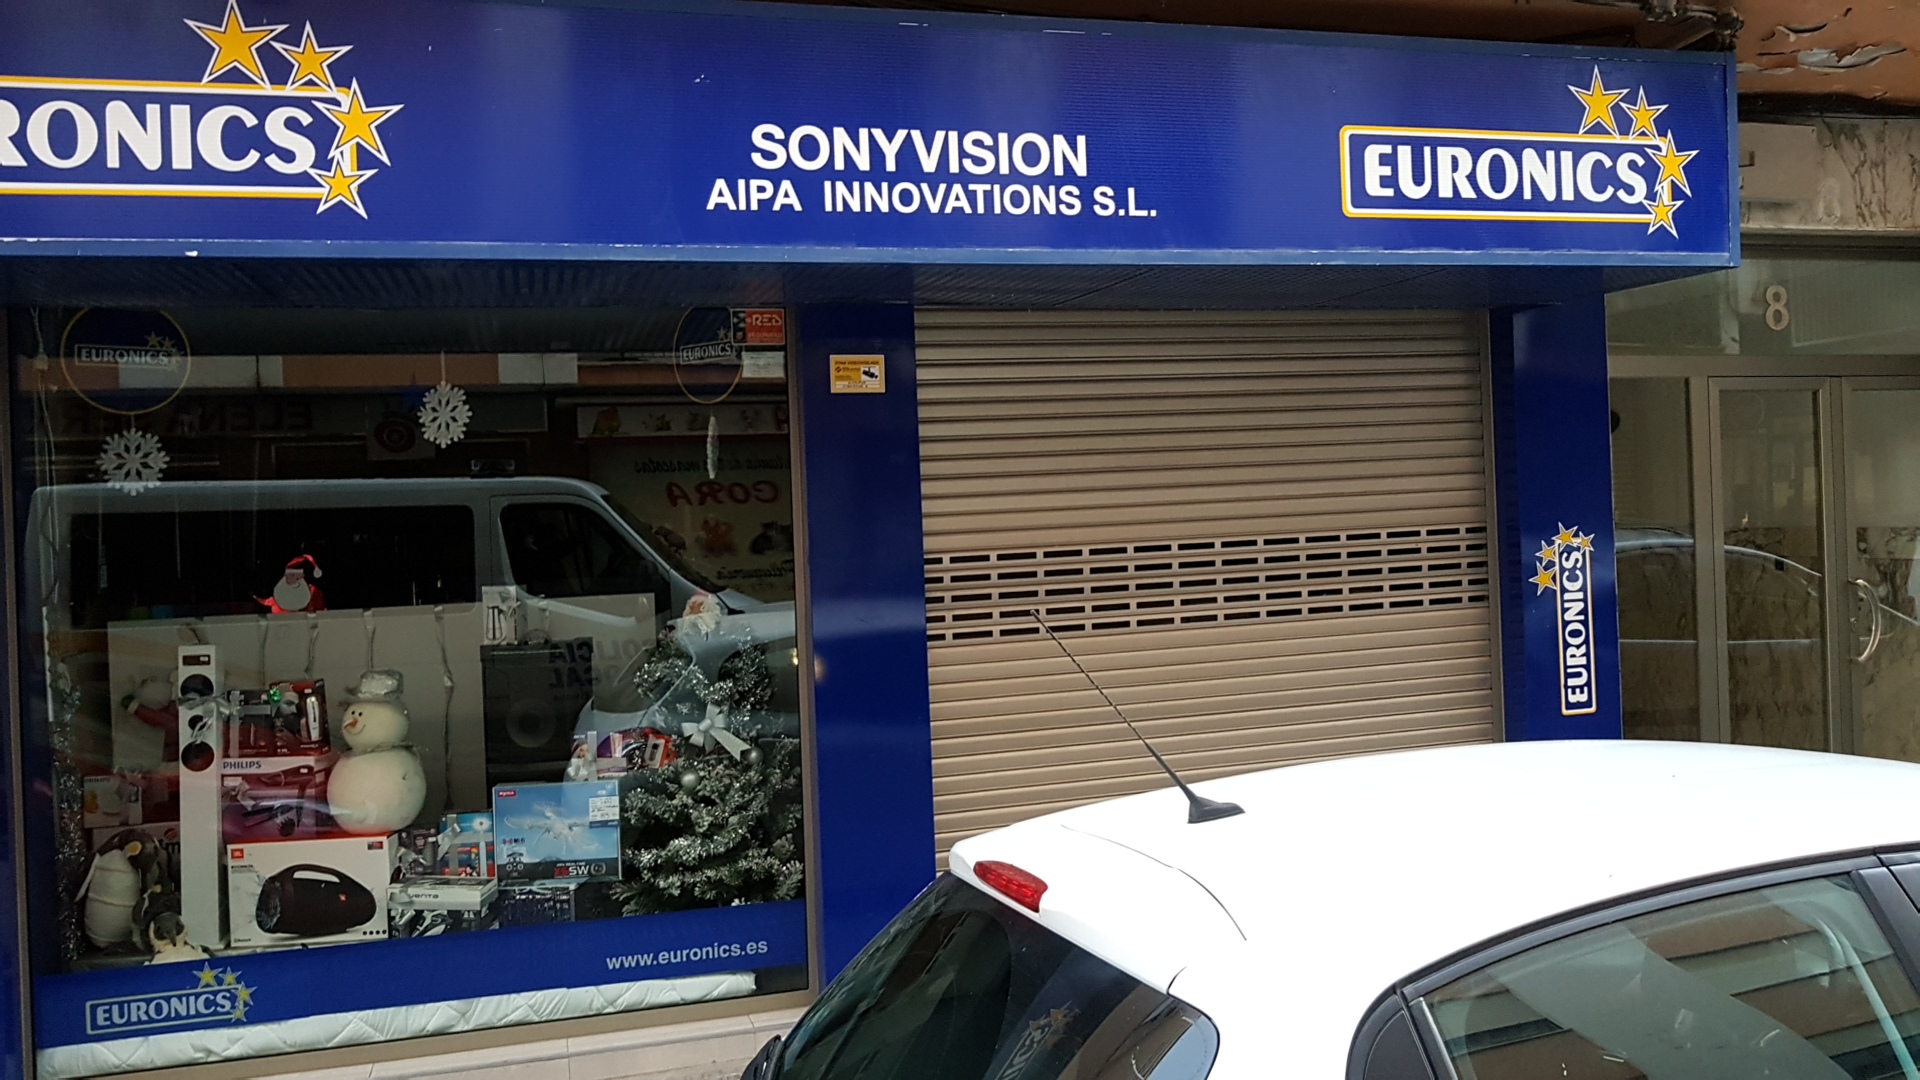 Euronics Sonyvision